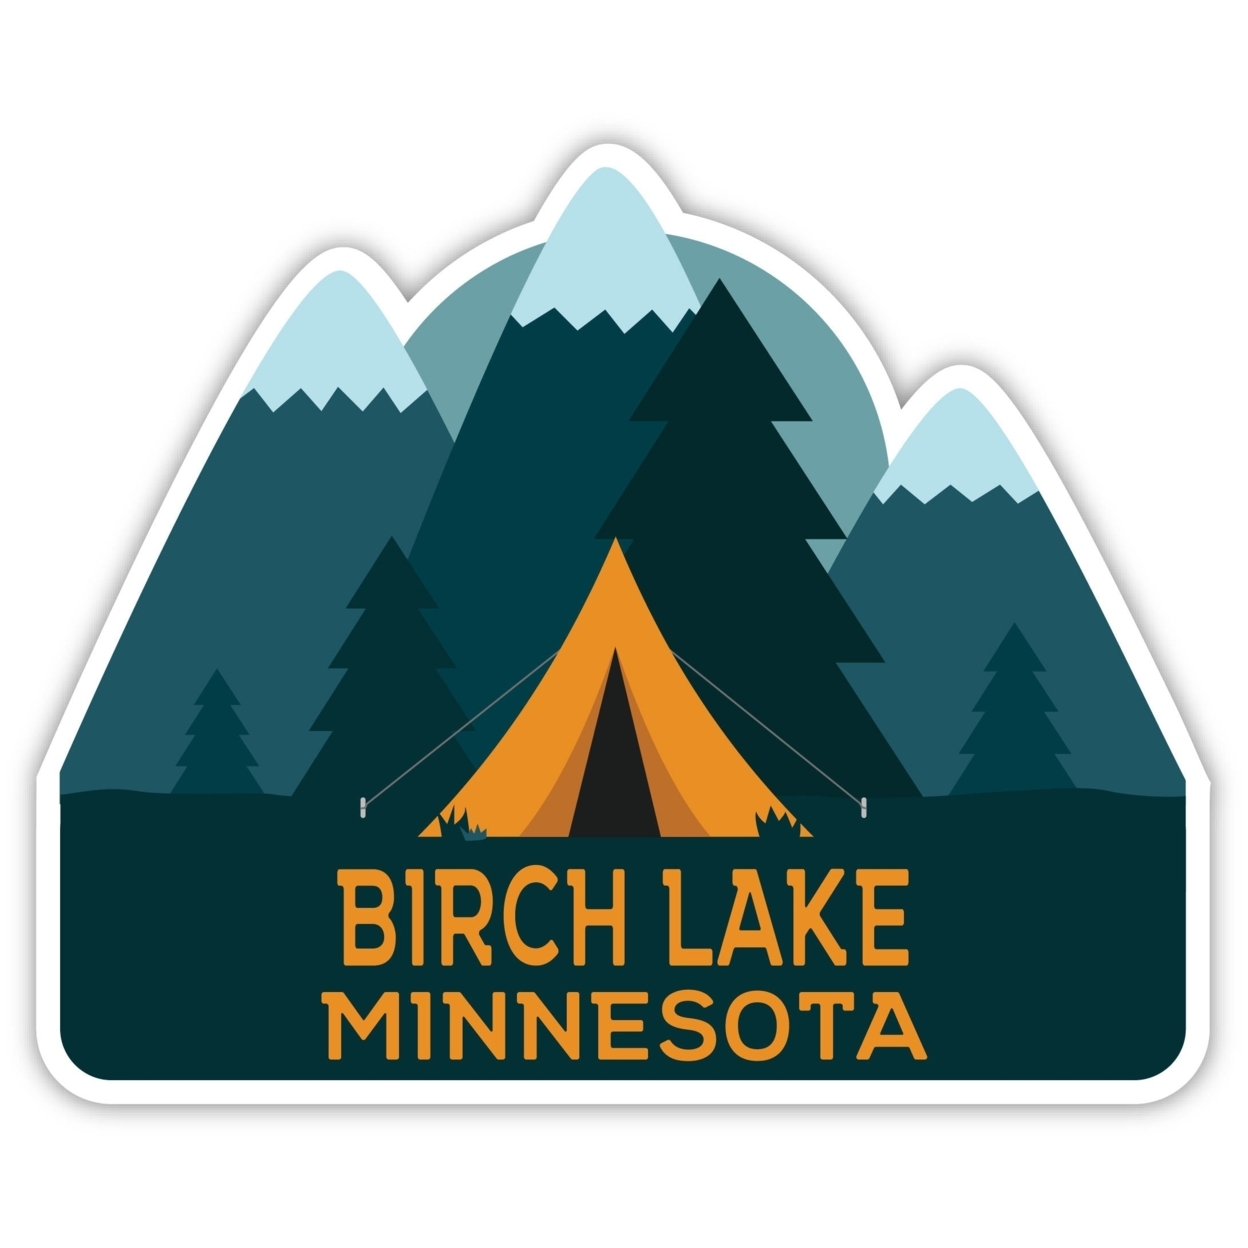 Birch Lake Minnesota Souvenir Decorative Stickers (Choose Theme And Size) - 4-Pack, 4-Inch, Tent